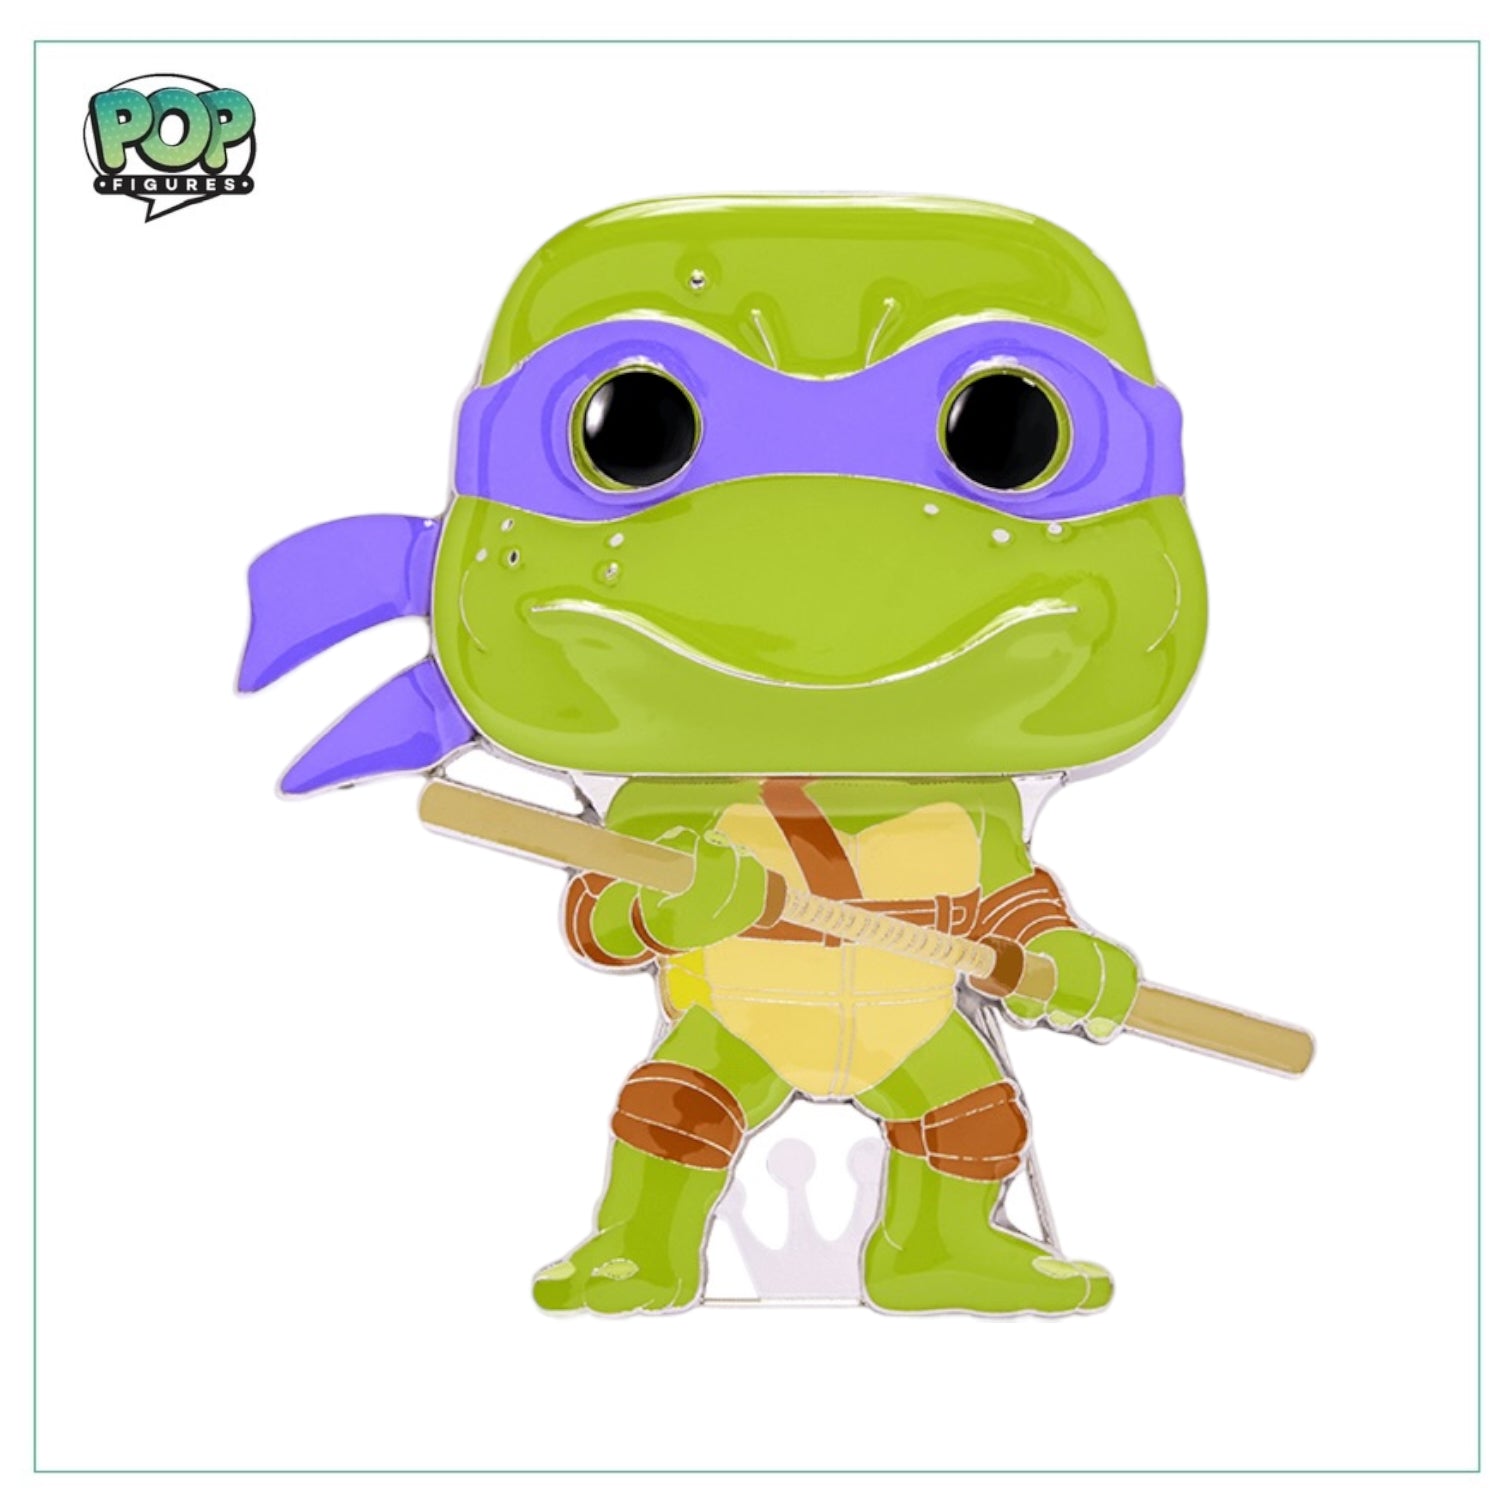 Donatello #20 Funko Enamel Pop Pin - Teenage Mutant Ninja Turtles